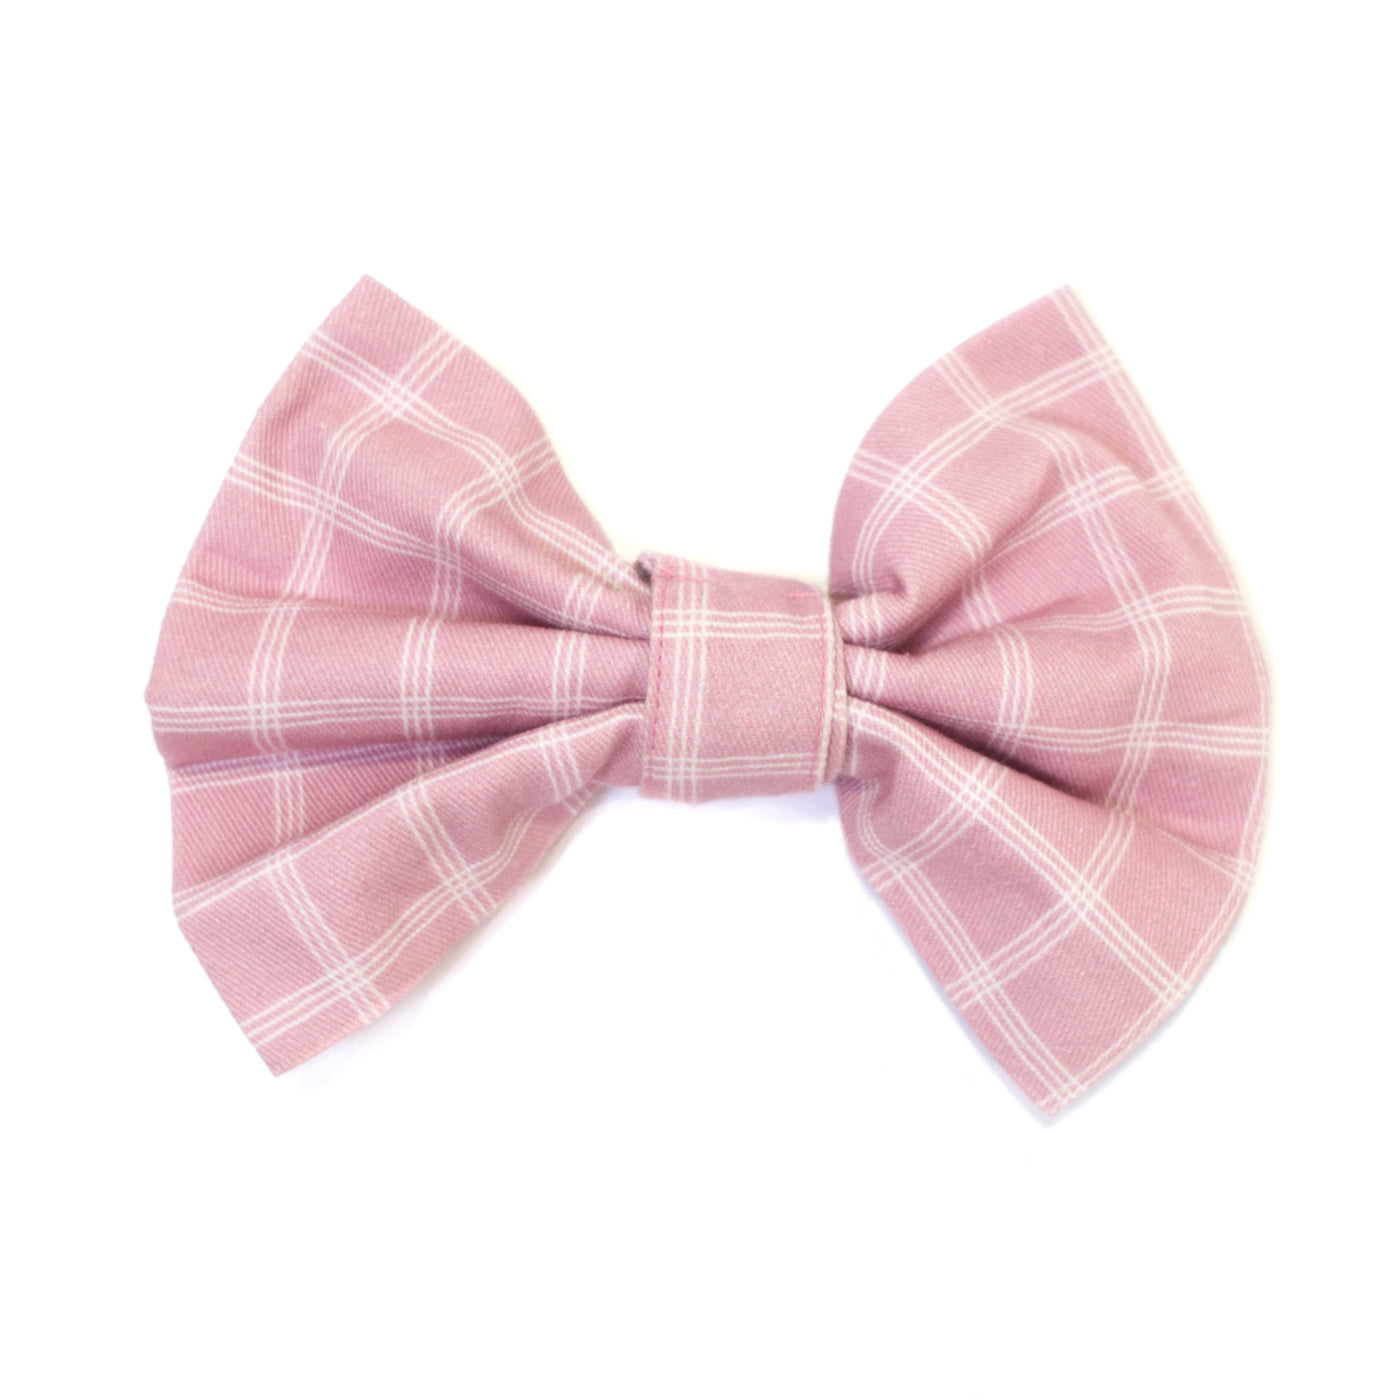 Millennial pink triple windowpane plaid classic dog bow tie